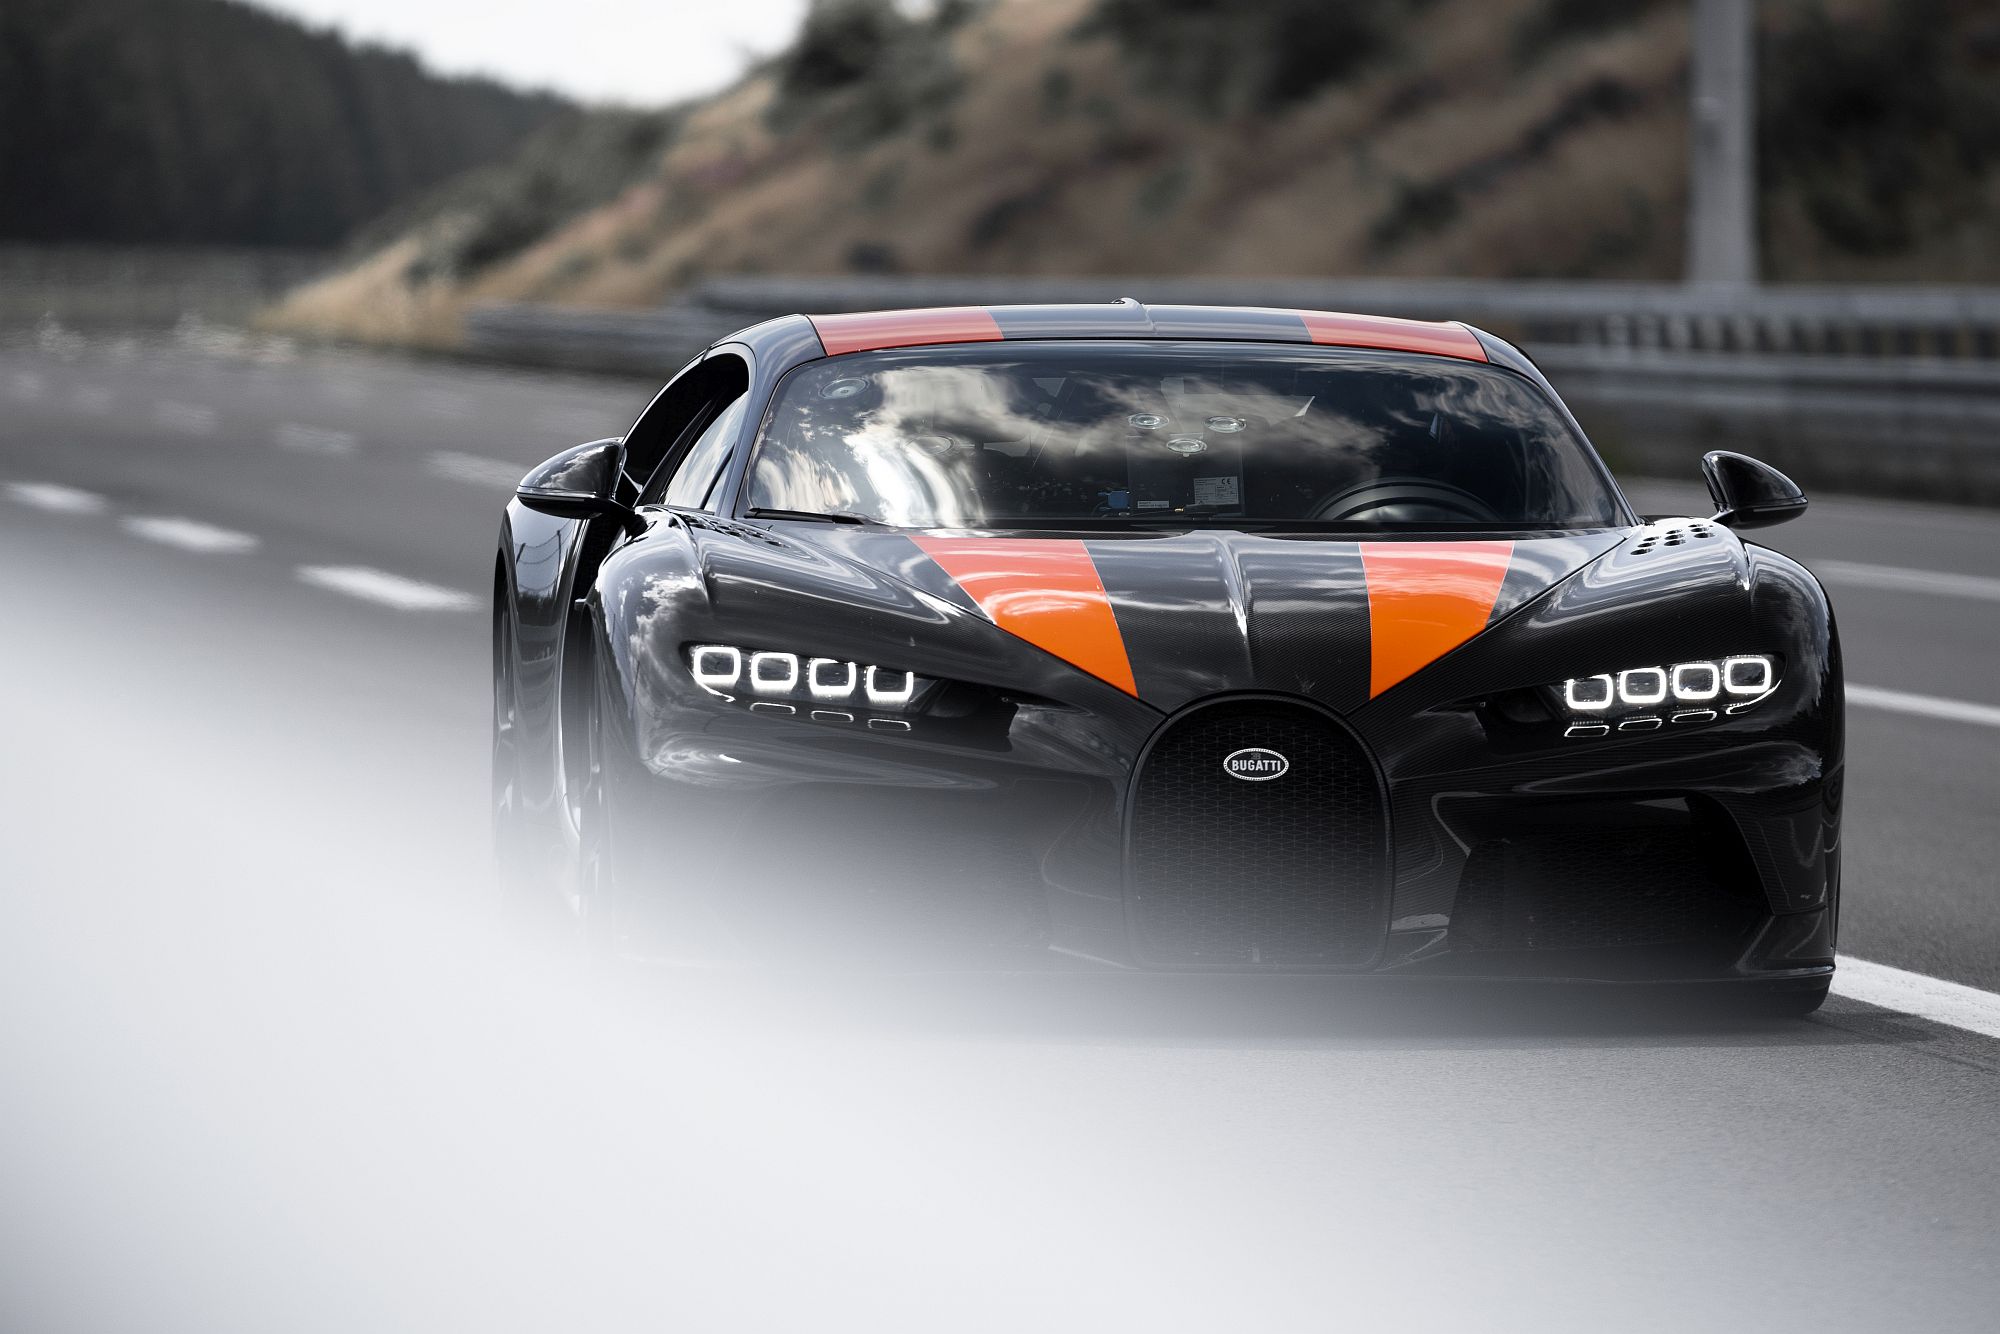 Bugatti Chiron 300 mph_2019 (4)